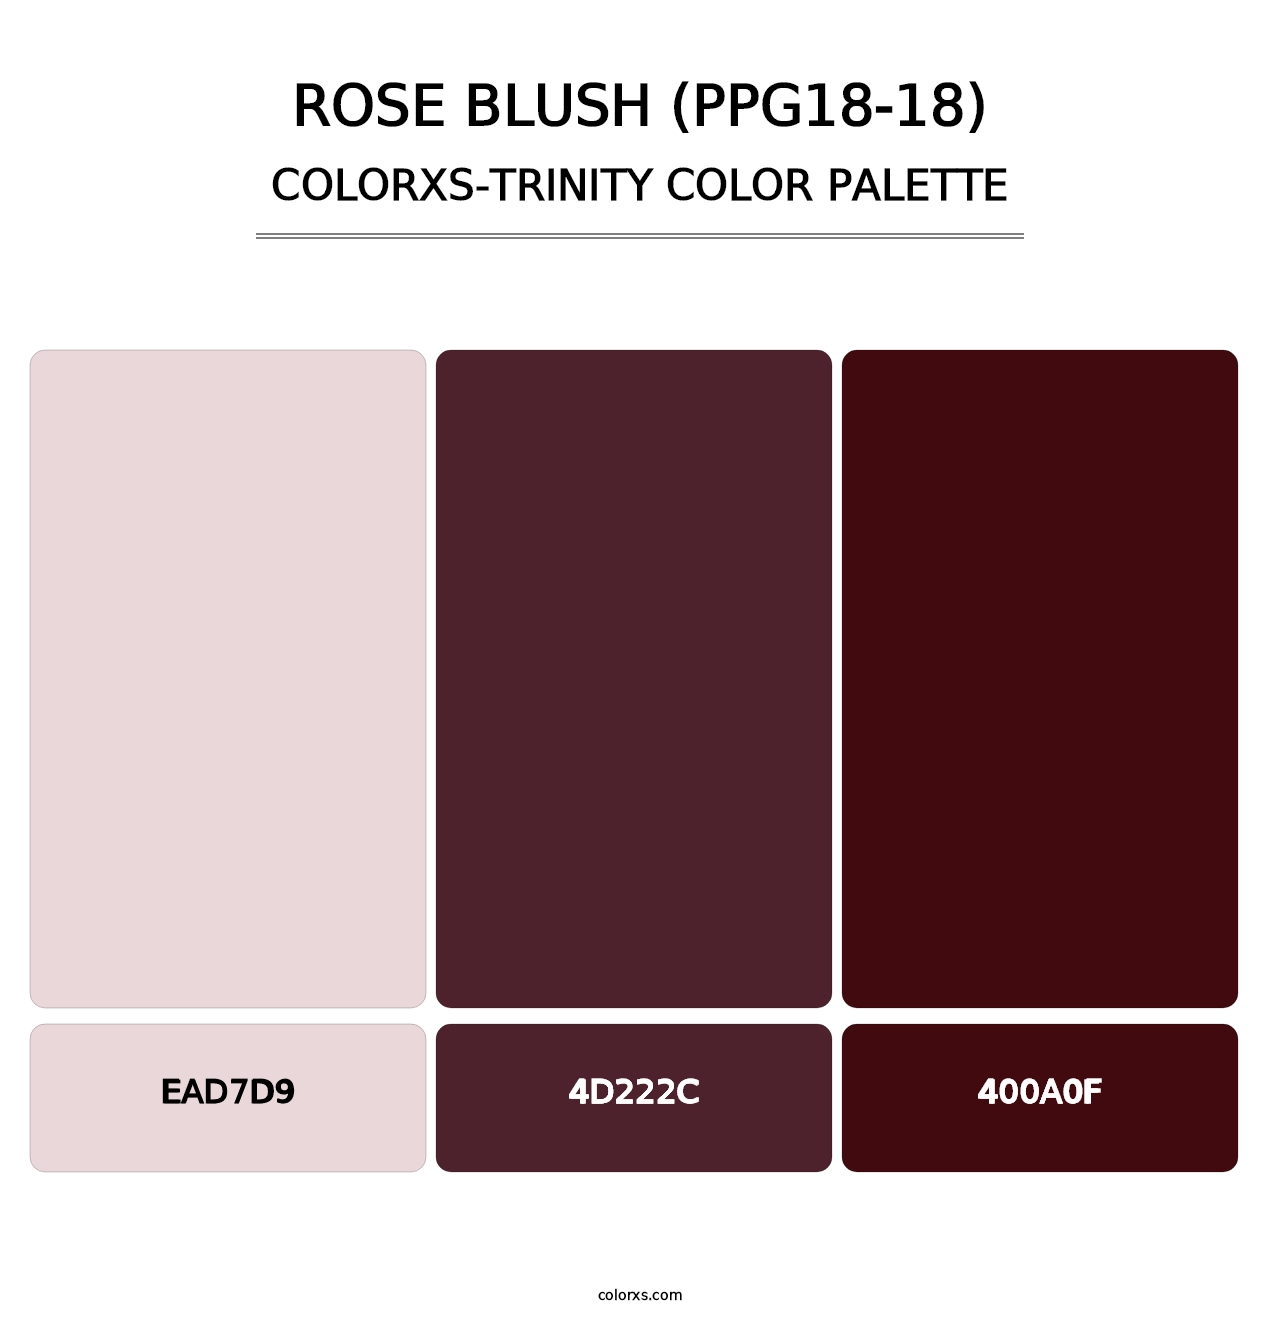 Rose Blush (PPG18-18) - Colorxs Trinity Palette